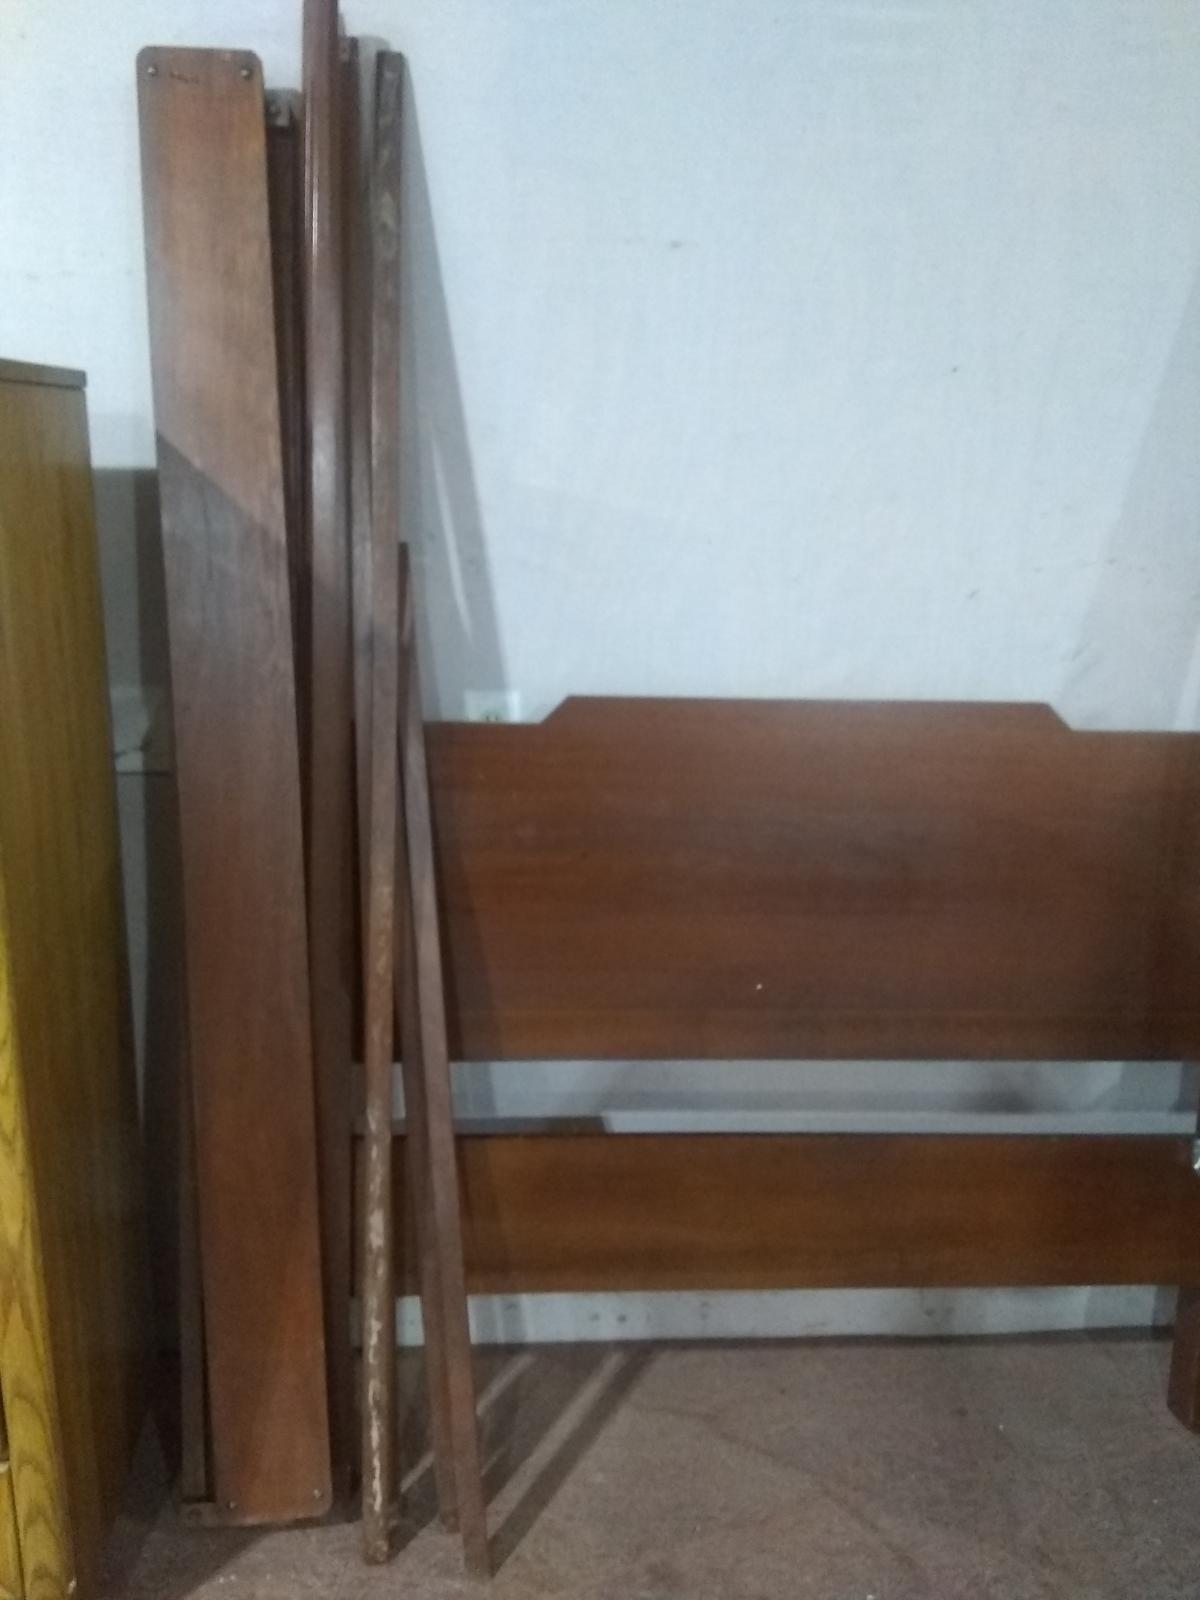 Antique Mahogany Pencil Post Bed (Double) w/ Flat Top Canopy